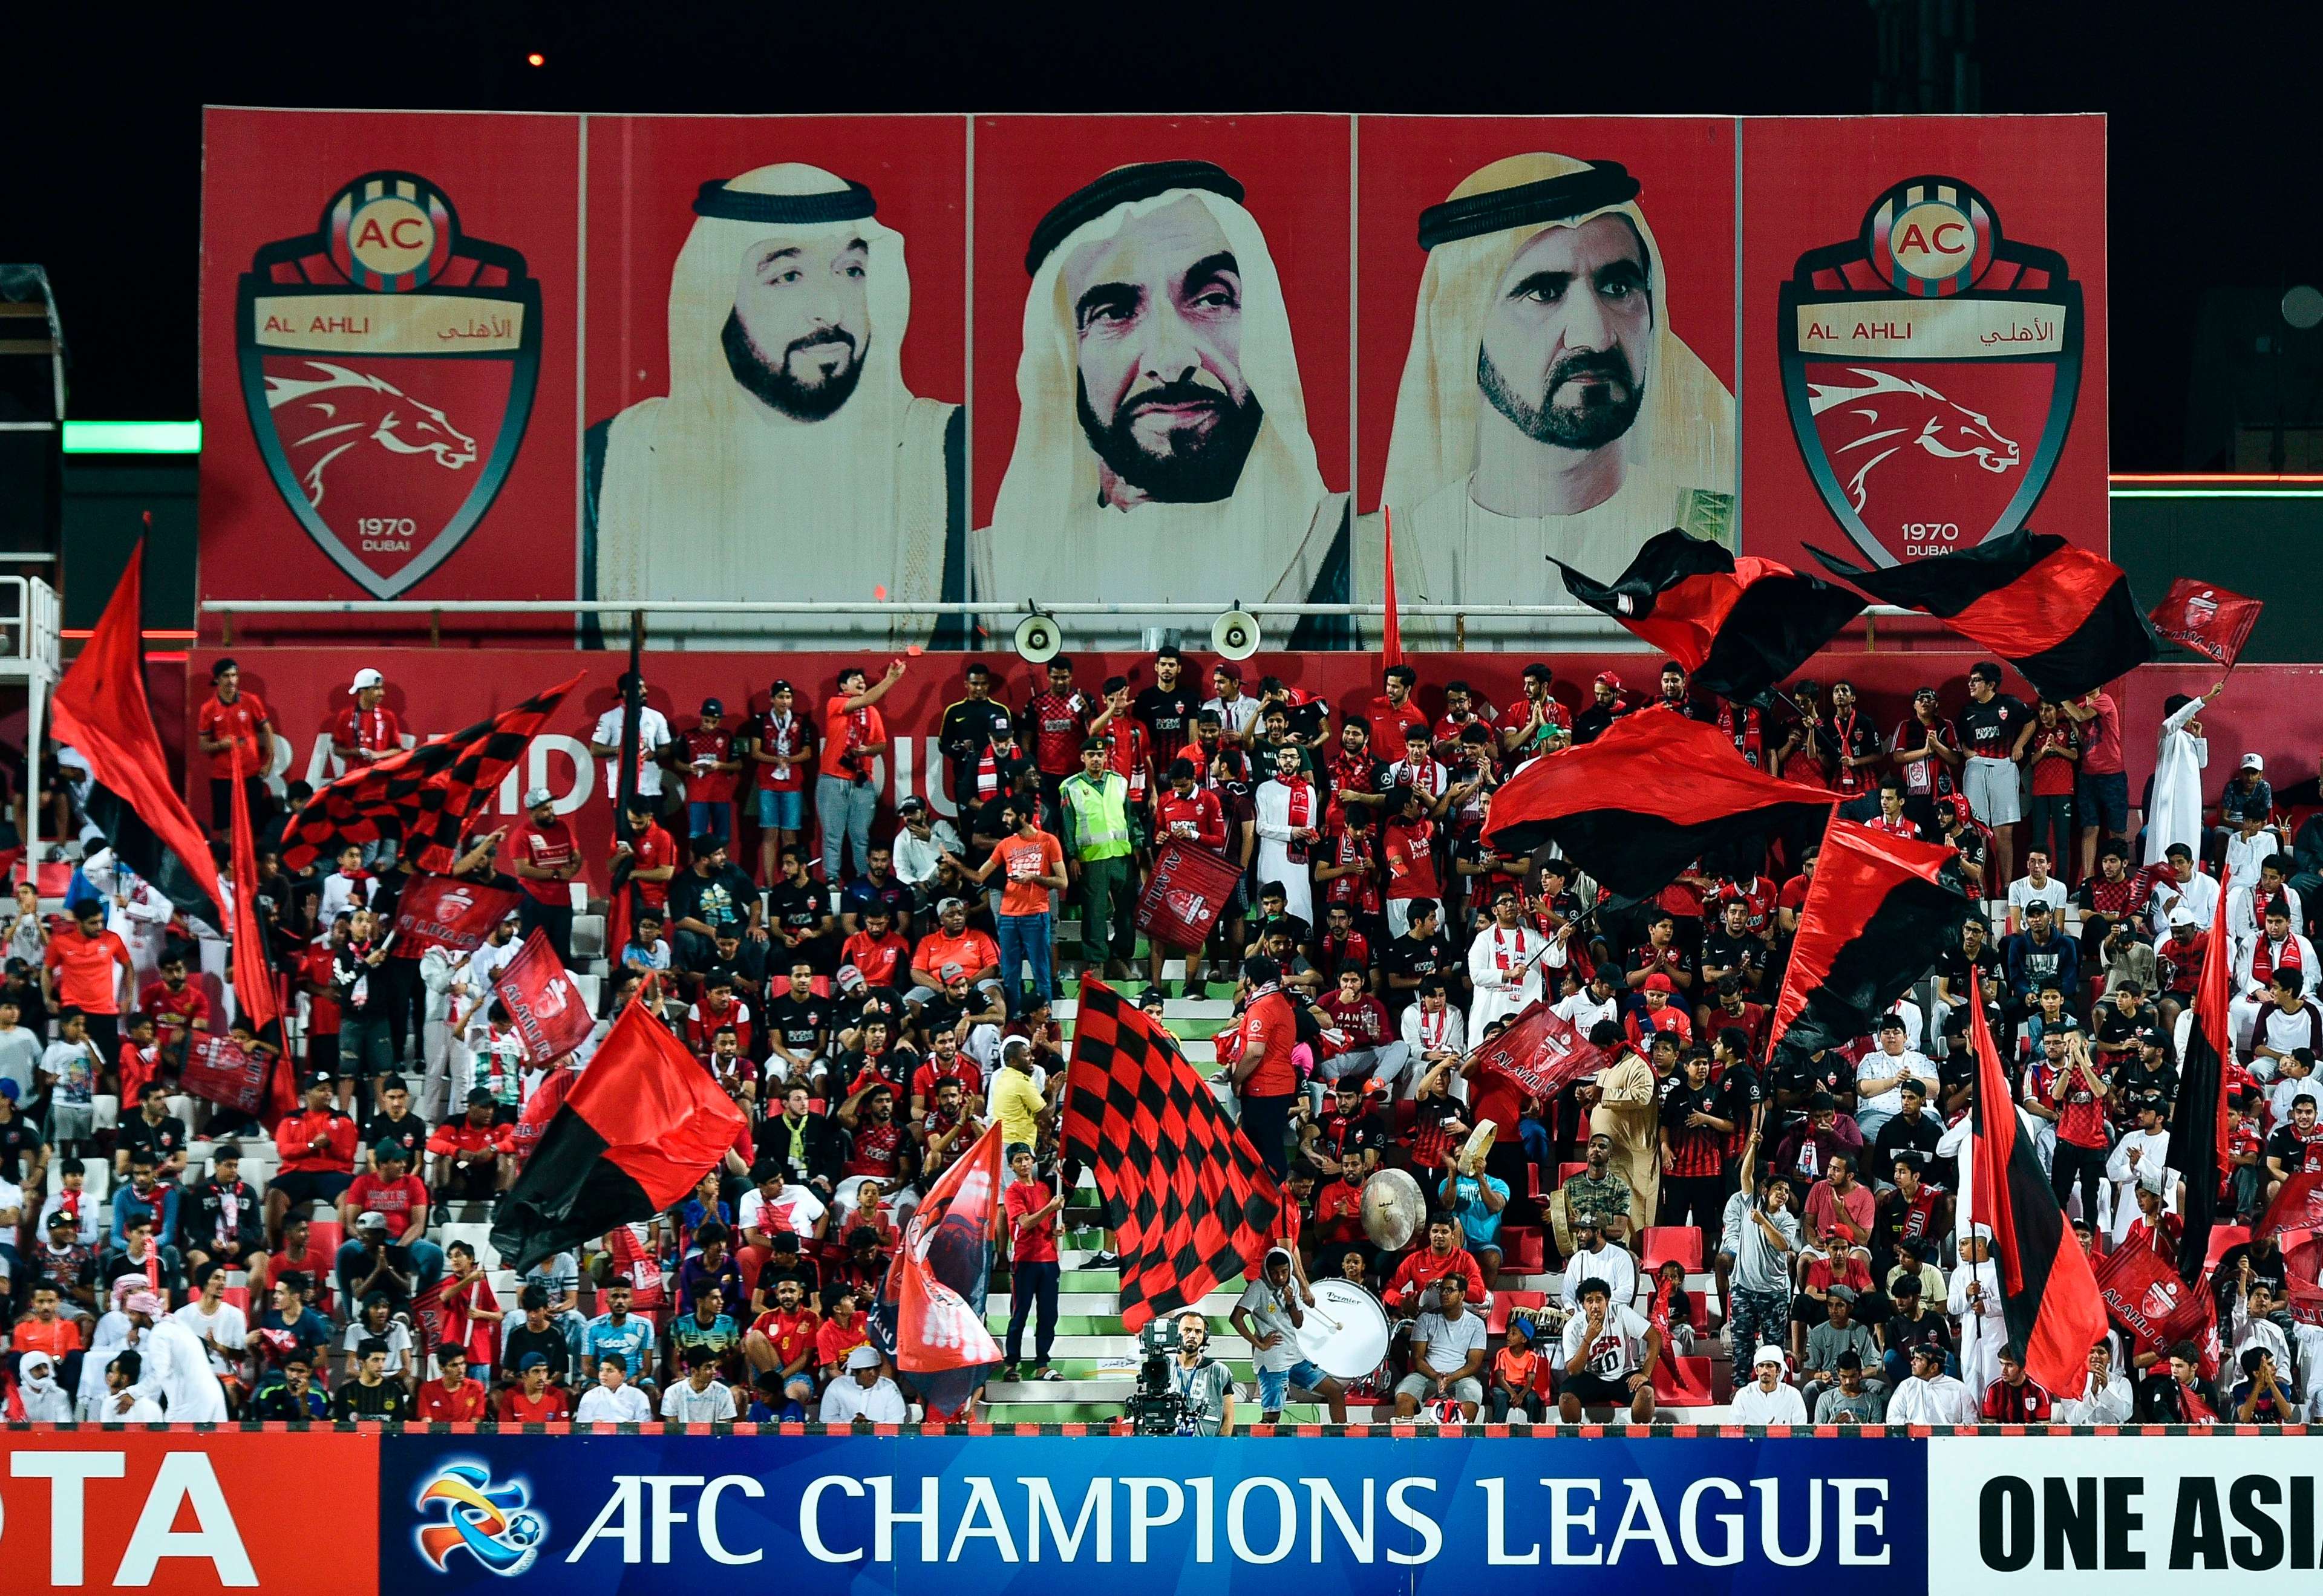 Al Ahli fans